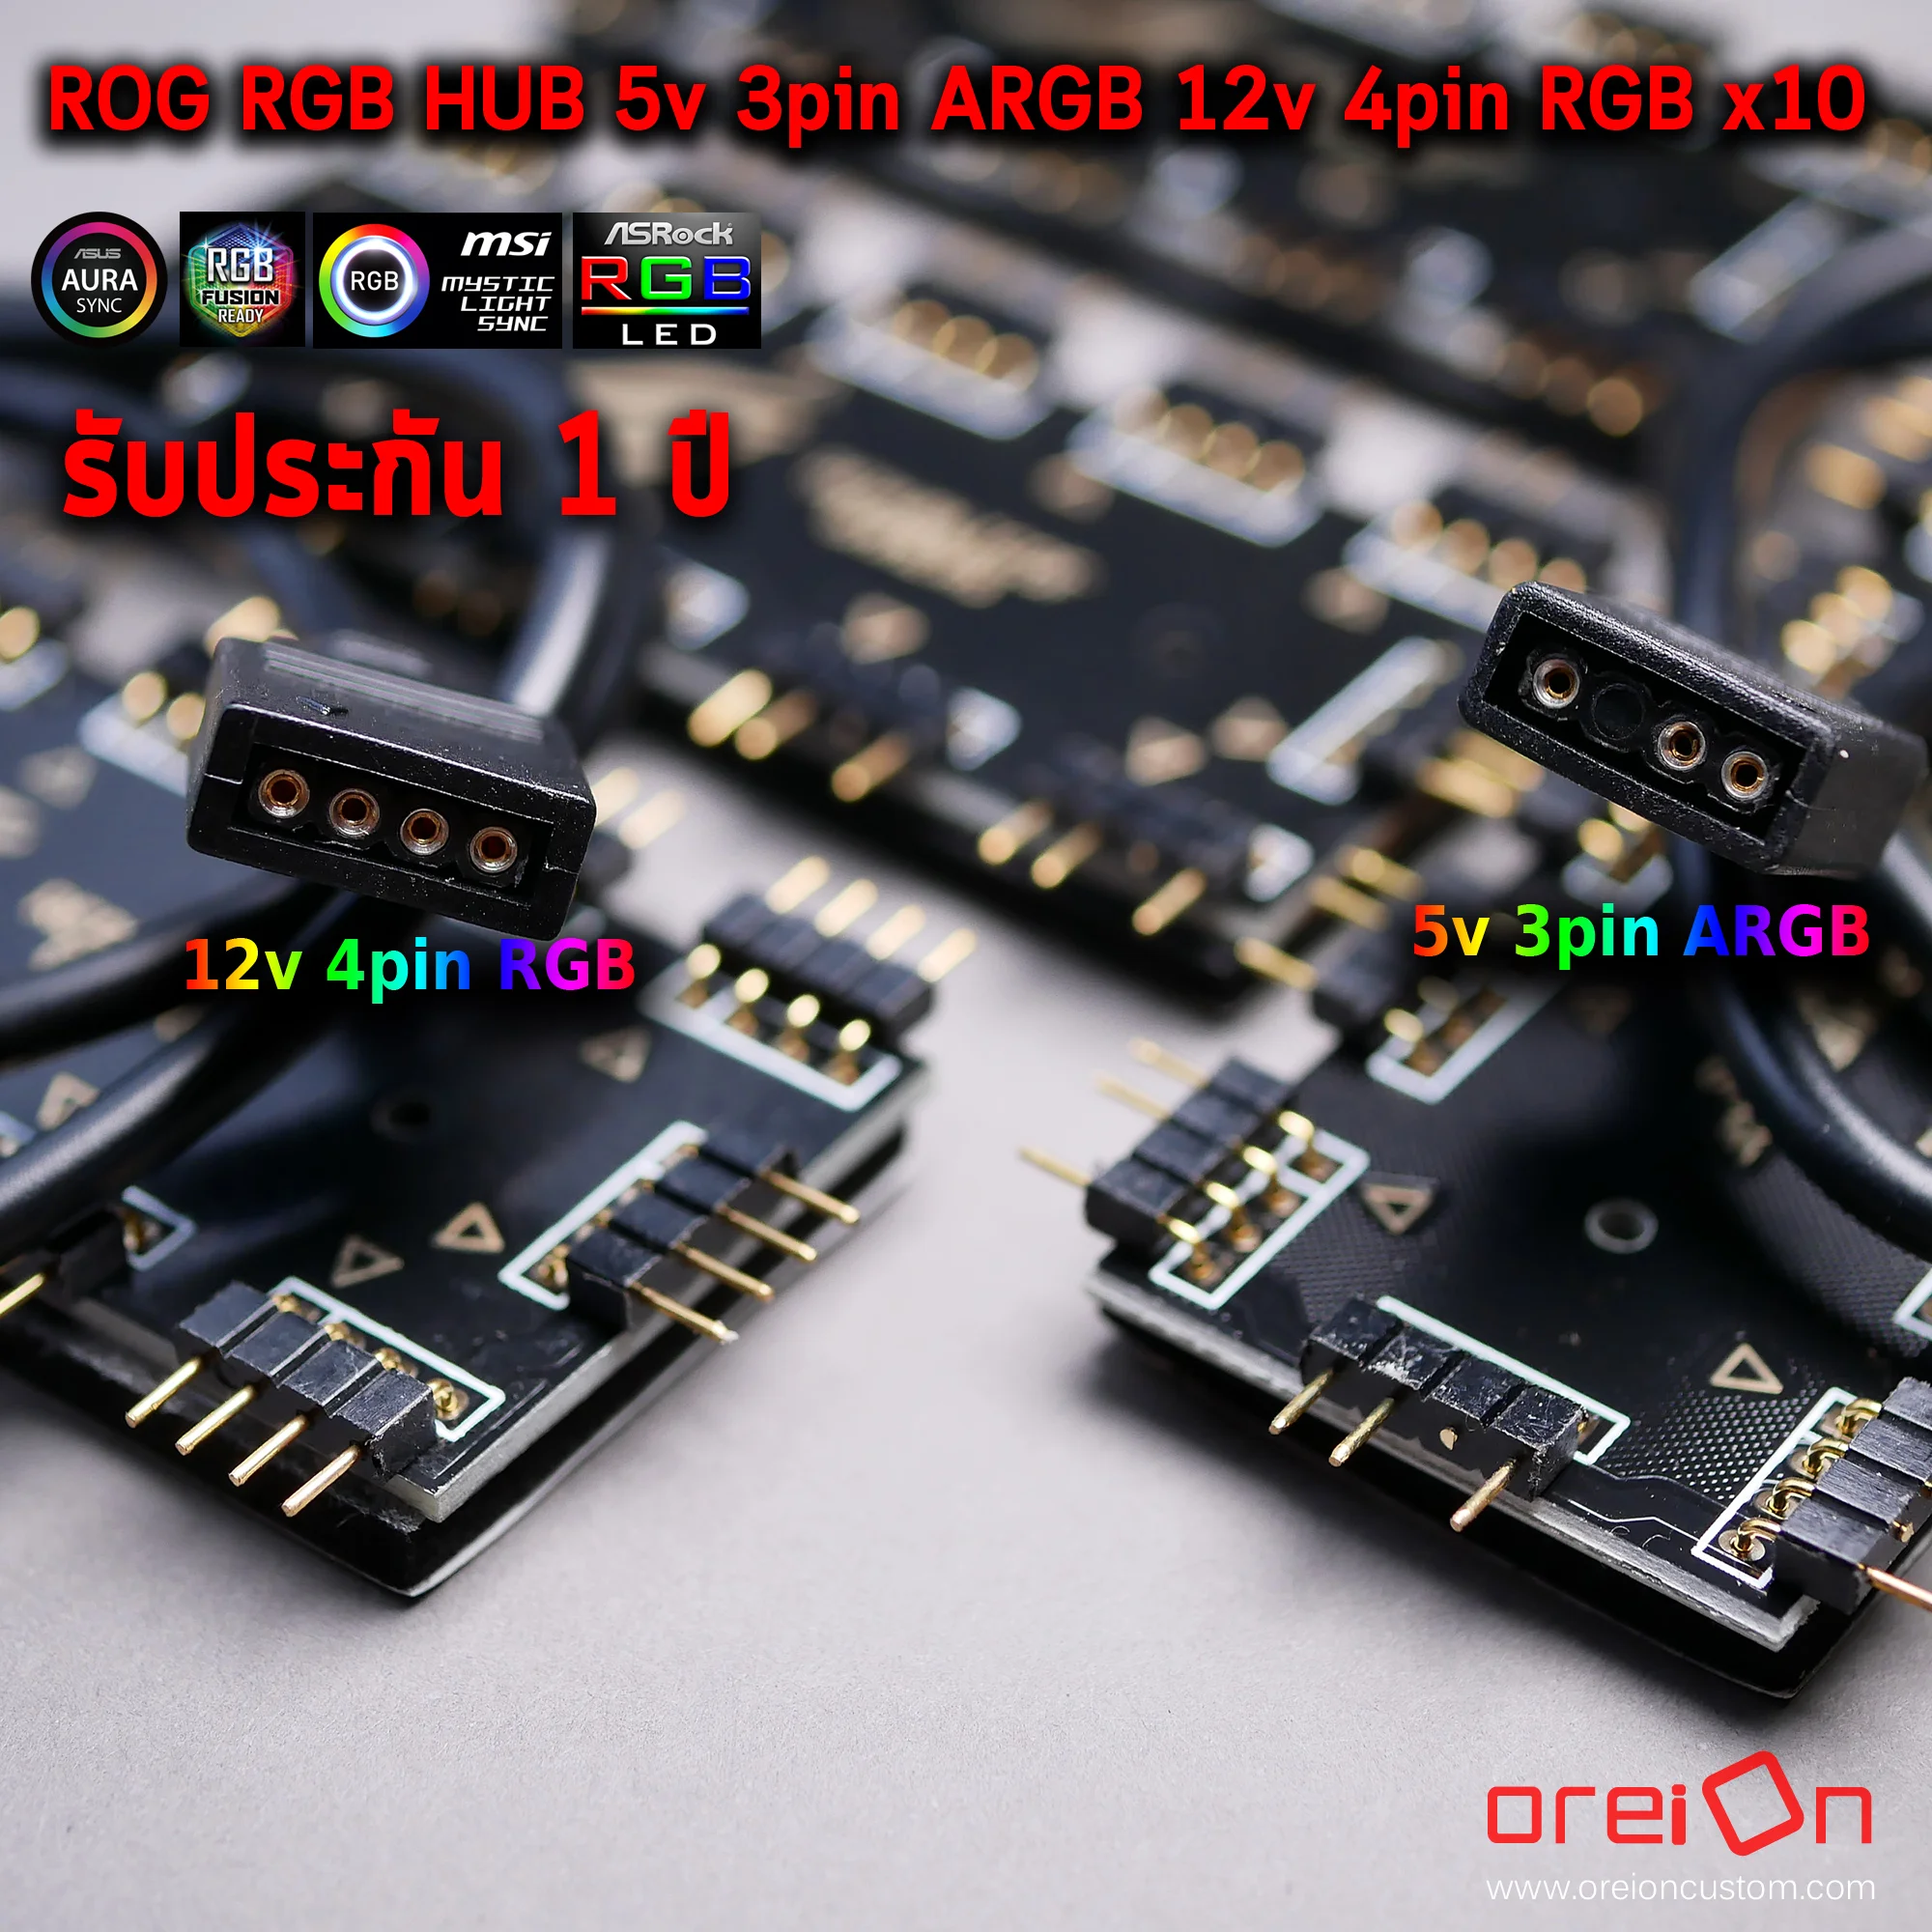 Splitter HUB RGB Hub ROG 3pin5v 4pin12v ARGBRGB LED (2)